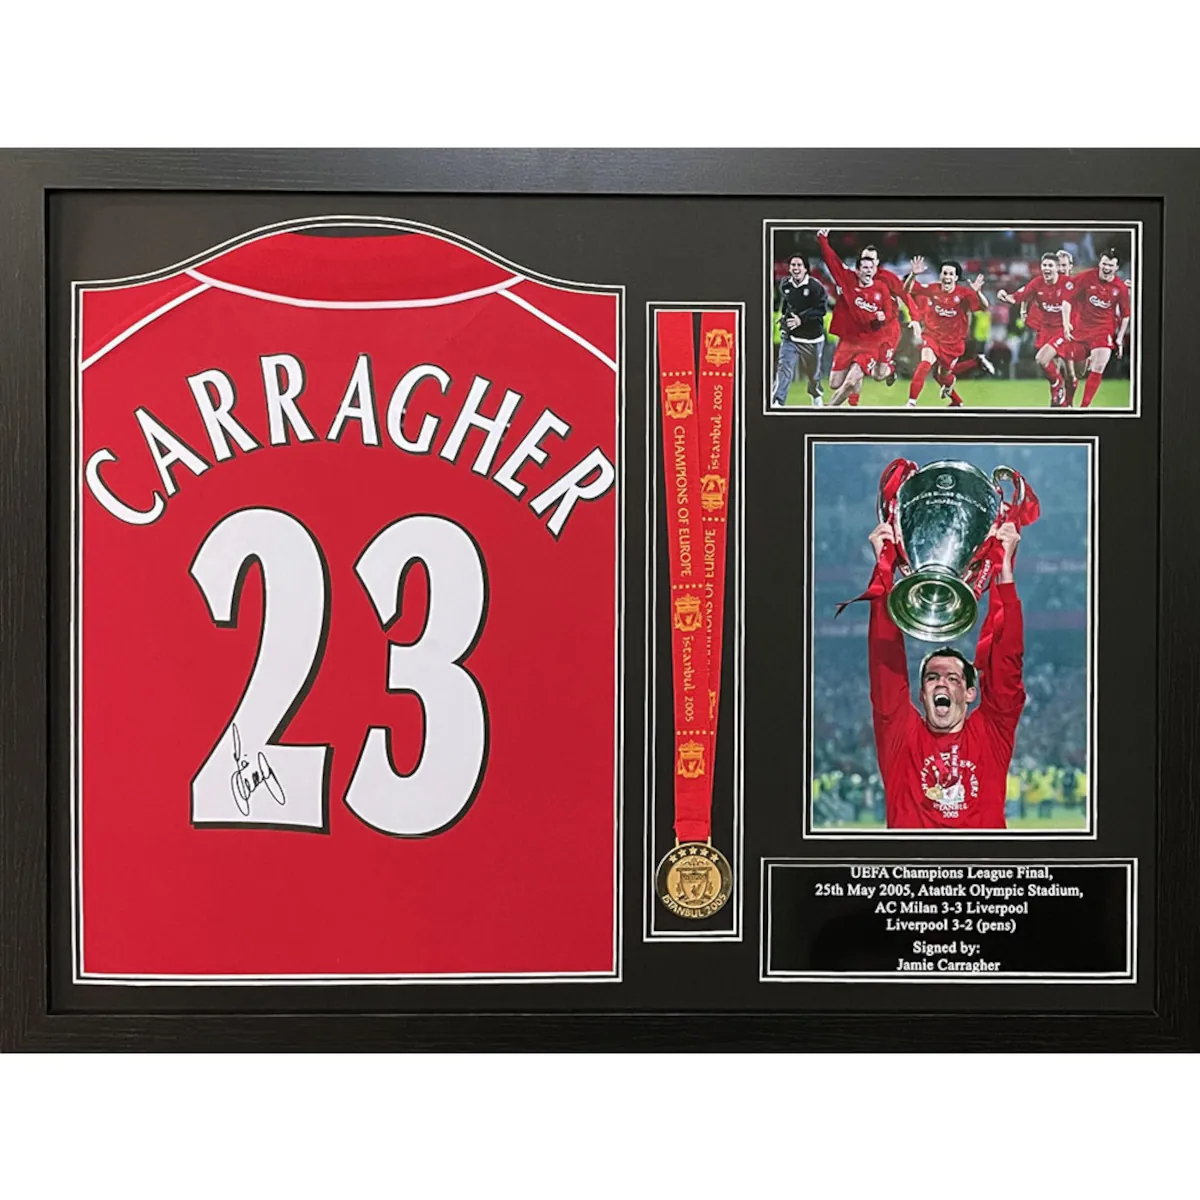 TM-01631 Liverpool F.C. Jamie Carragher Framed Signed 2000 Replica Football Shirt & Medal